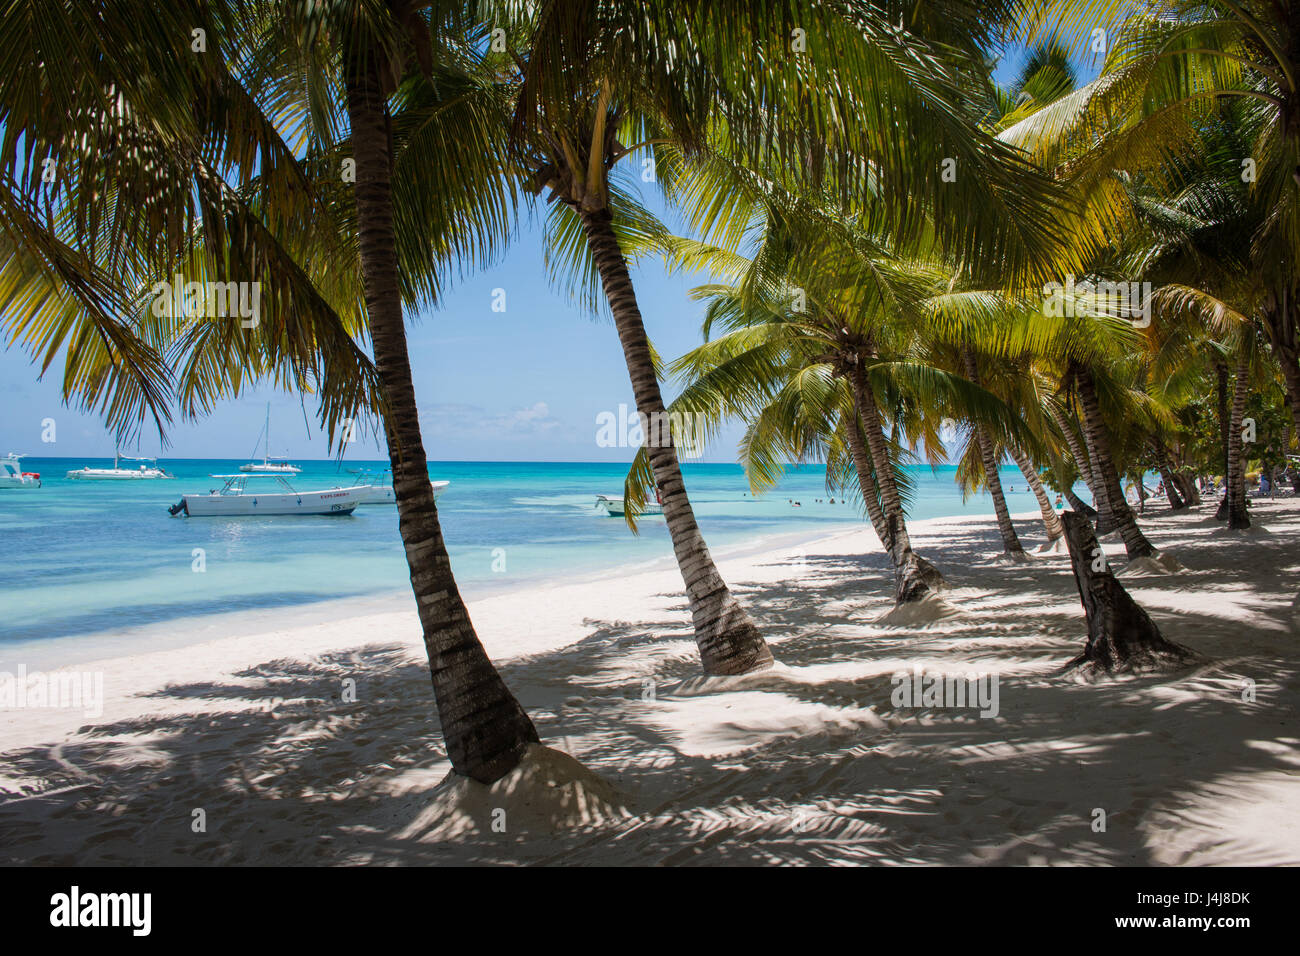 Palm trees on the saona island in the caribbean. Stock Photo